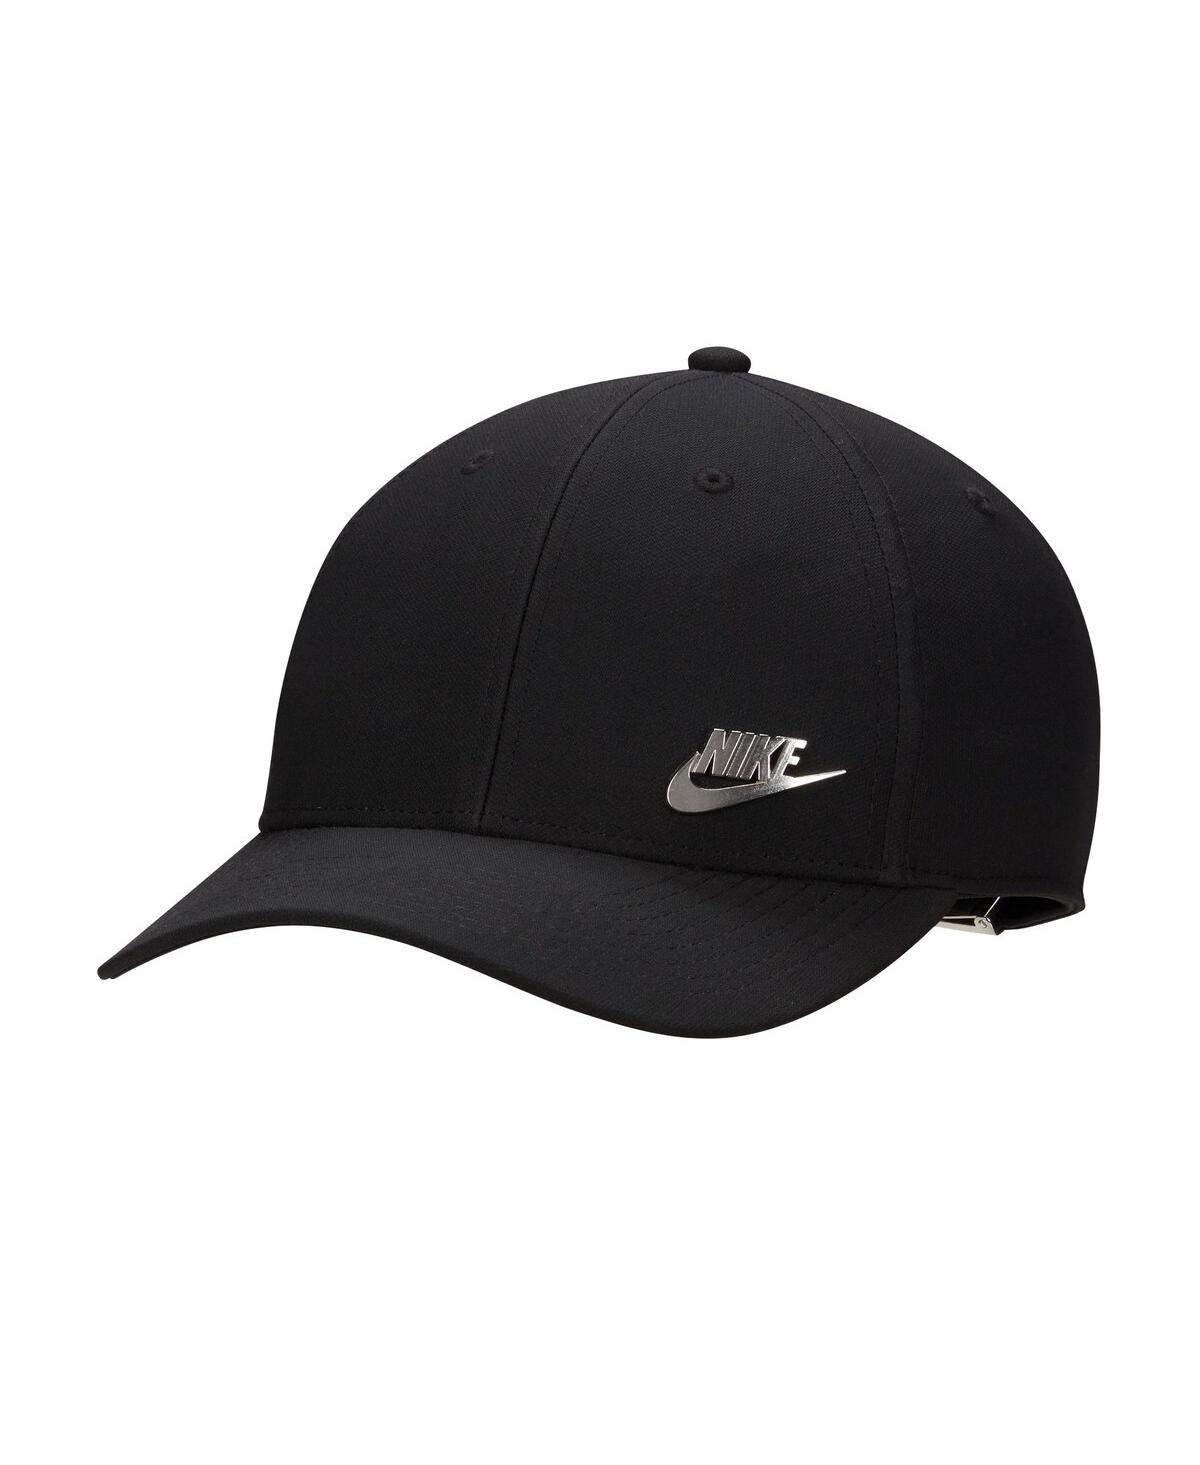 Nike Men's  Black Metal Futura Lifestyle Club Performance Adjustable Hat